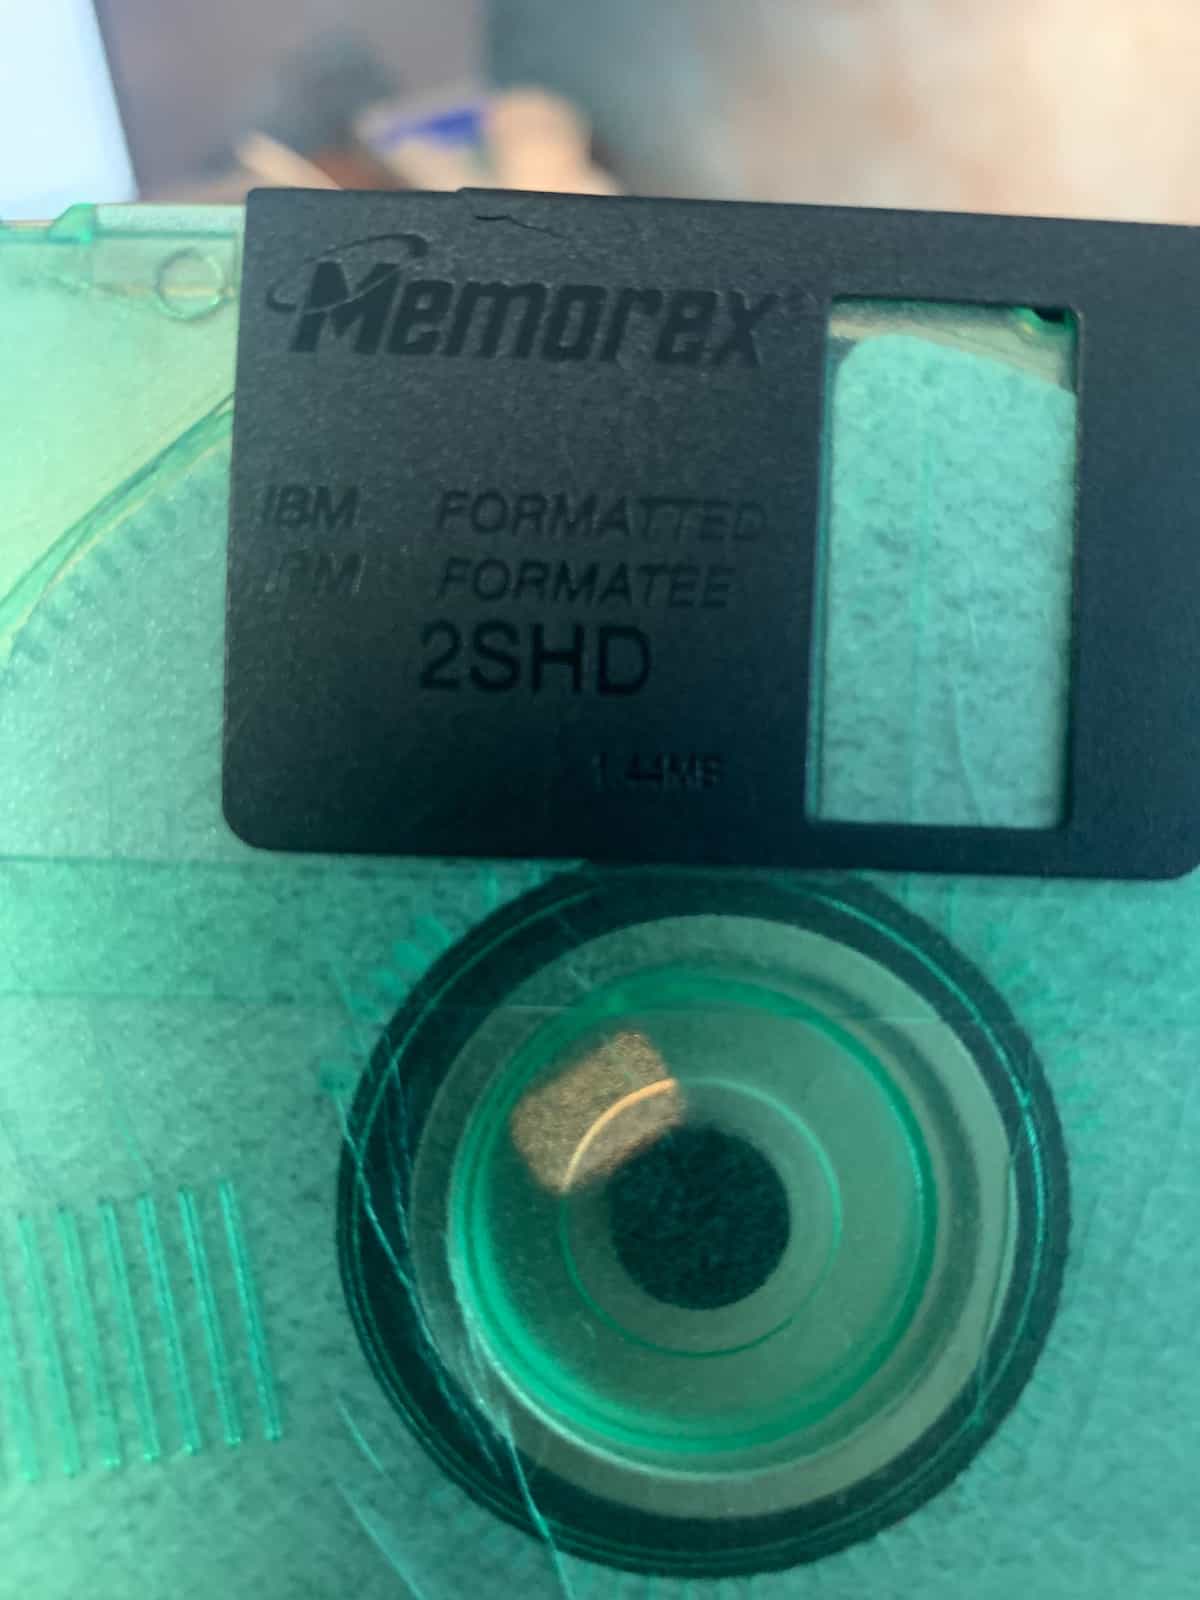 Memorex Floppy Disk